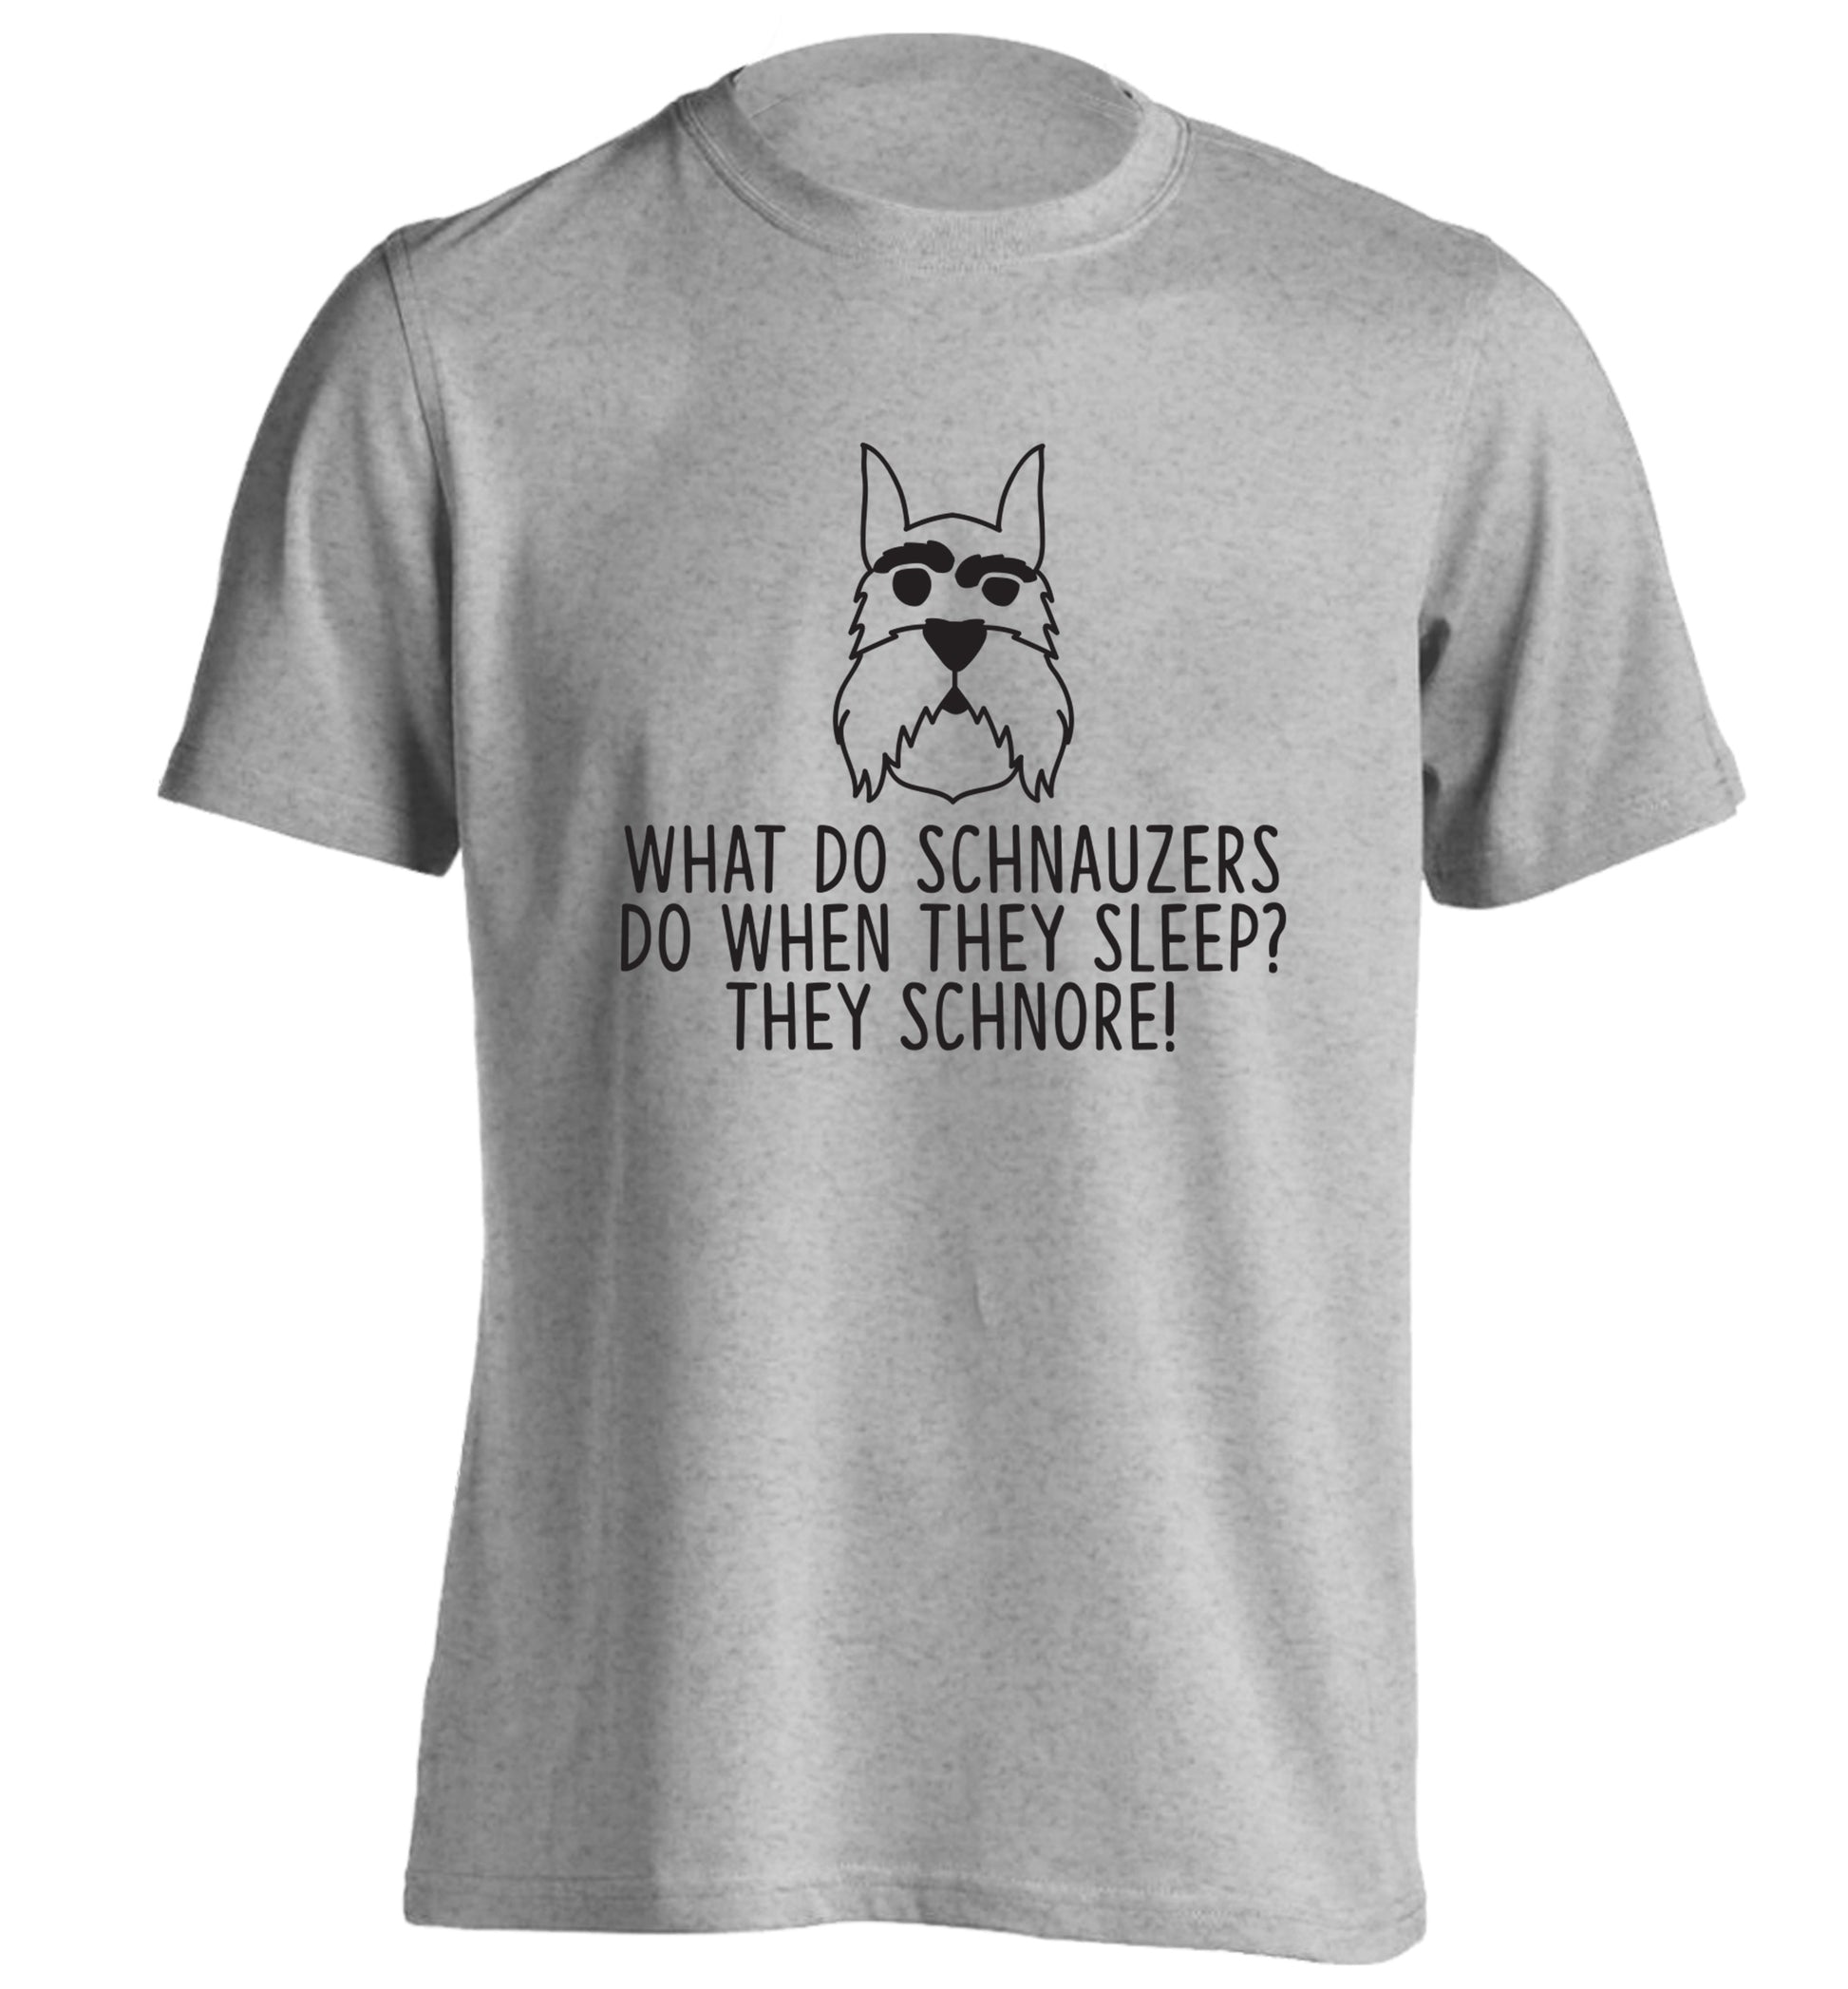 What do schnauzers do when they sleep? Schnore! adults unisex grey Tshirt 2XL